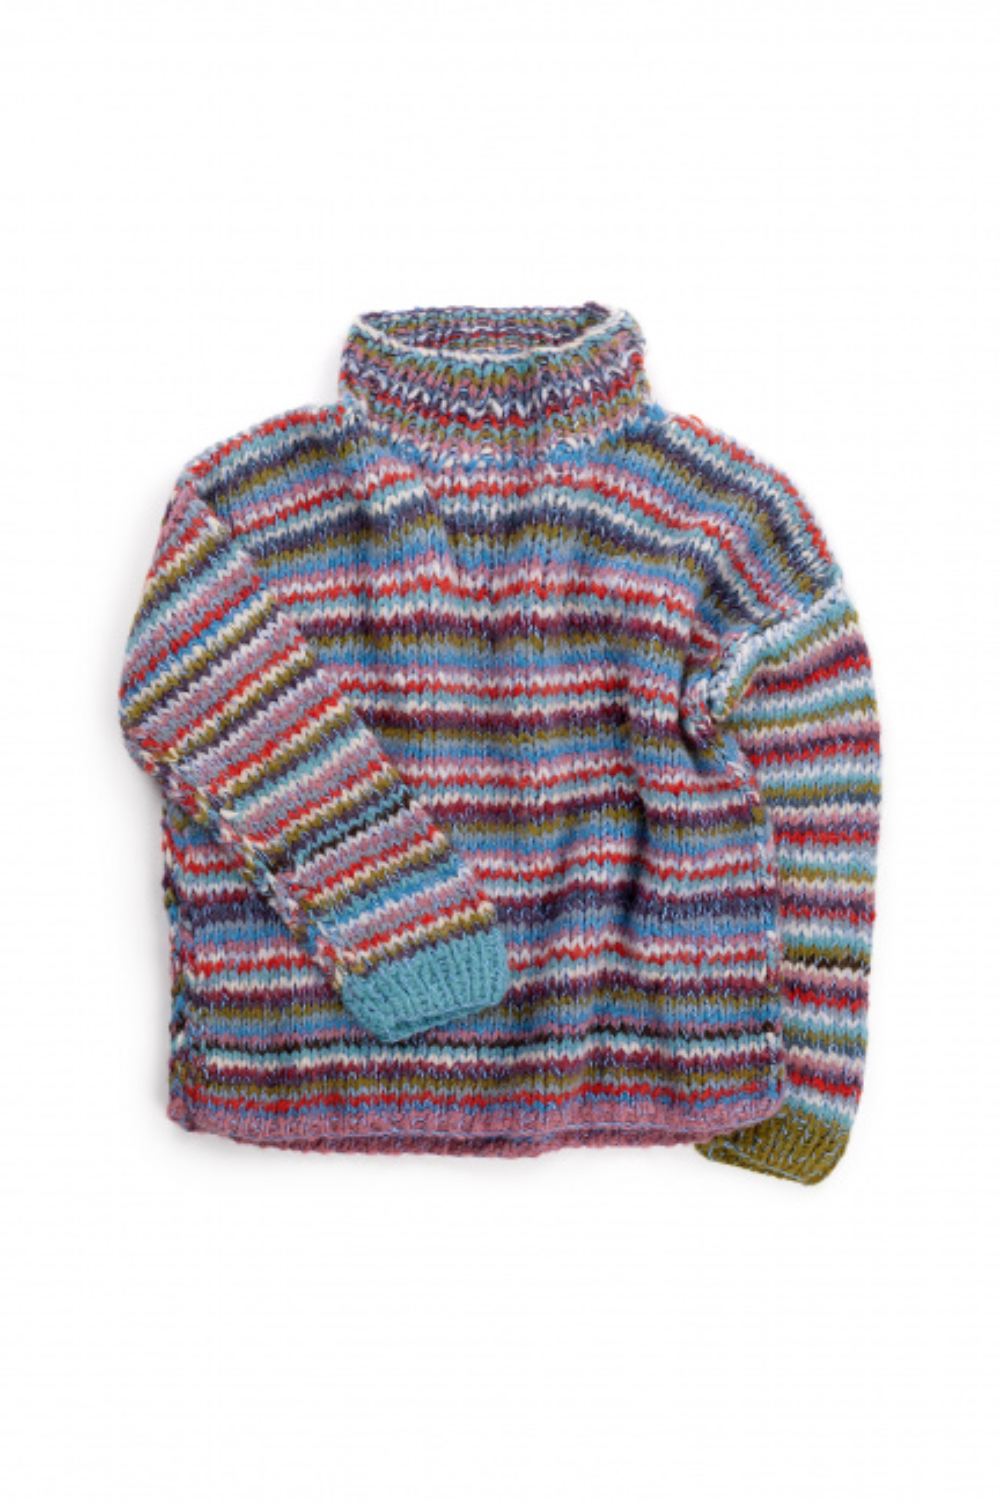 striped alpaca jumper sweater loose fit womens amano